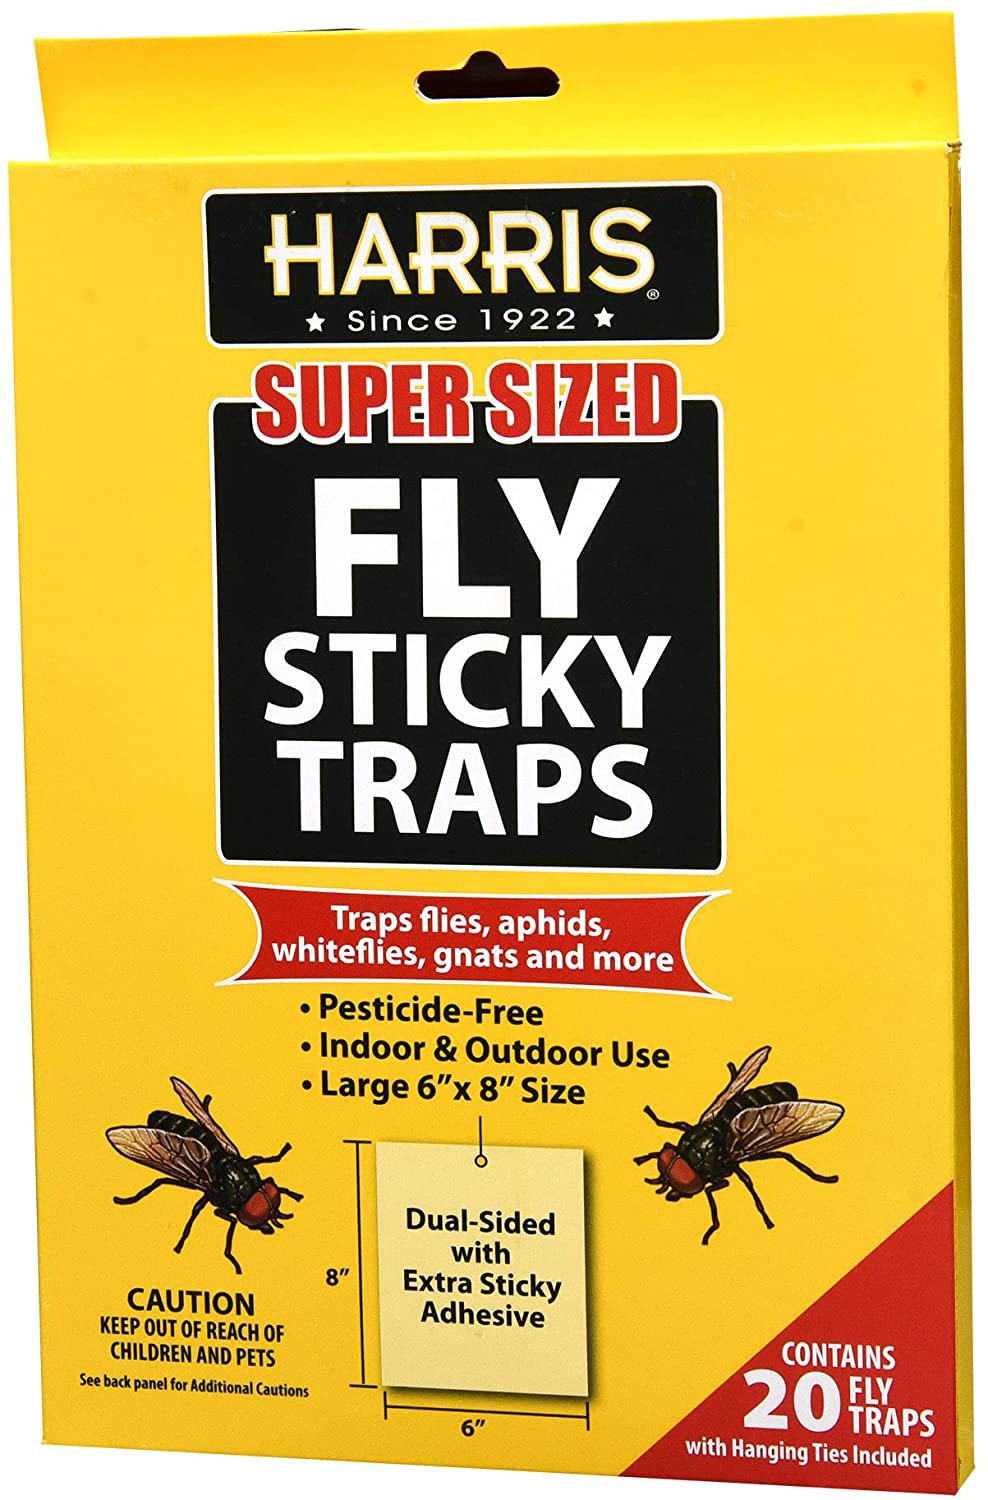 Bug-Scan Sticky Traps